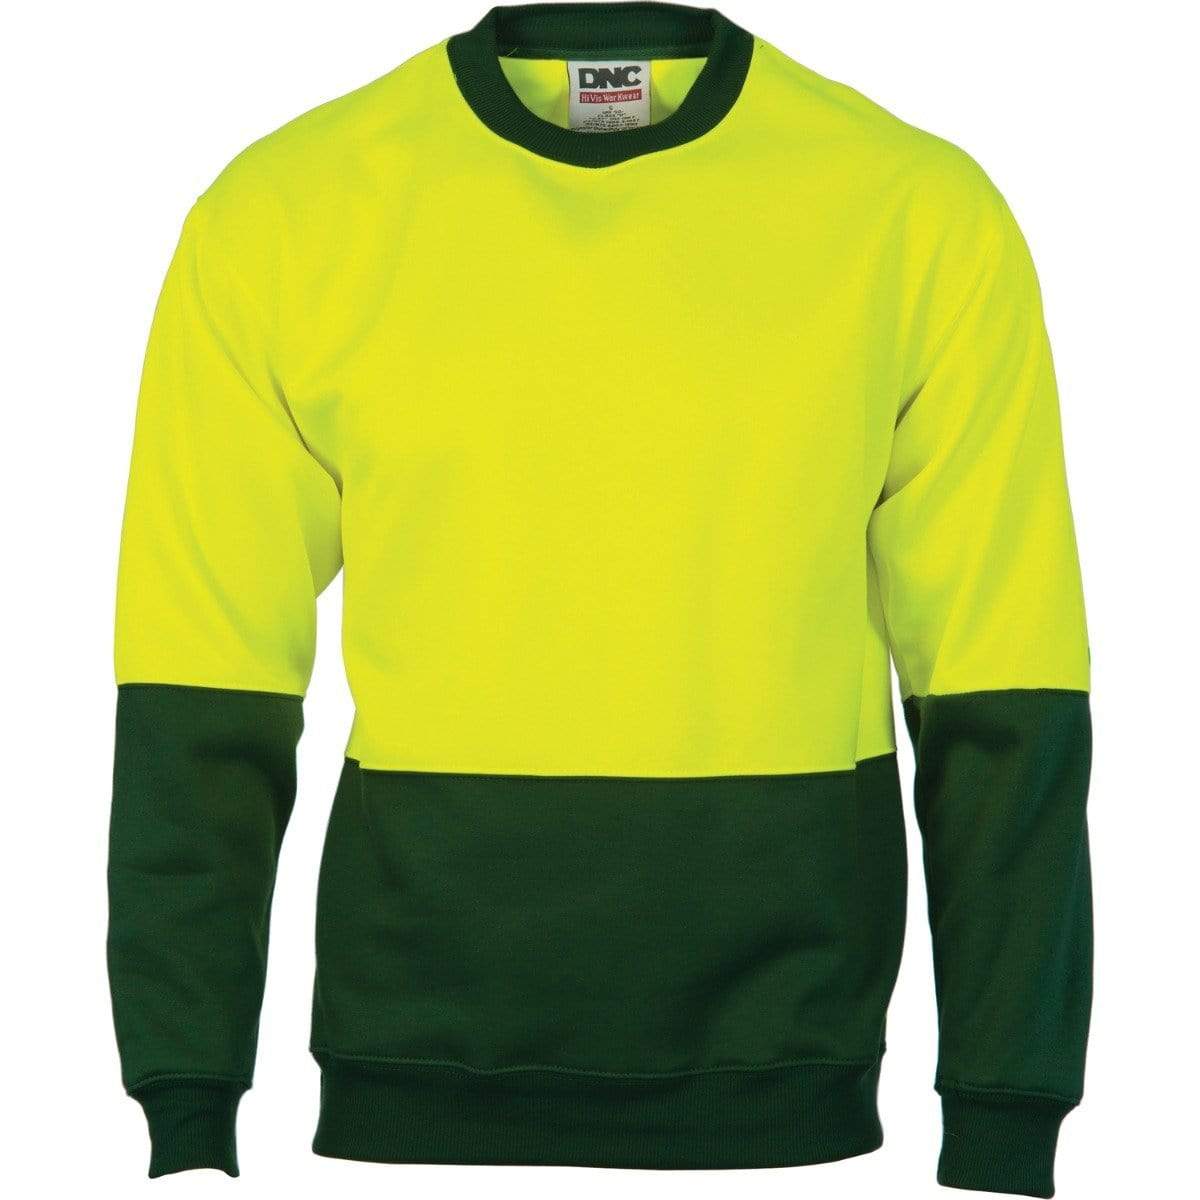 Dnc Workwear Hi-vis Two-tone Fleecy Crew-neck Sweatshirt (Sloppy Joe) - 3821 Work Wear DNC Workwear Yellow/Bottle Green XS 